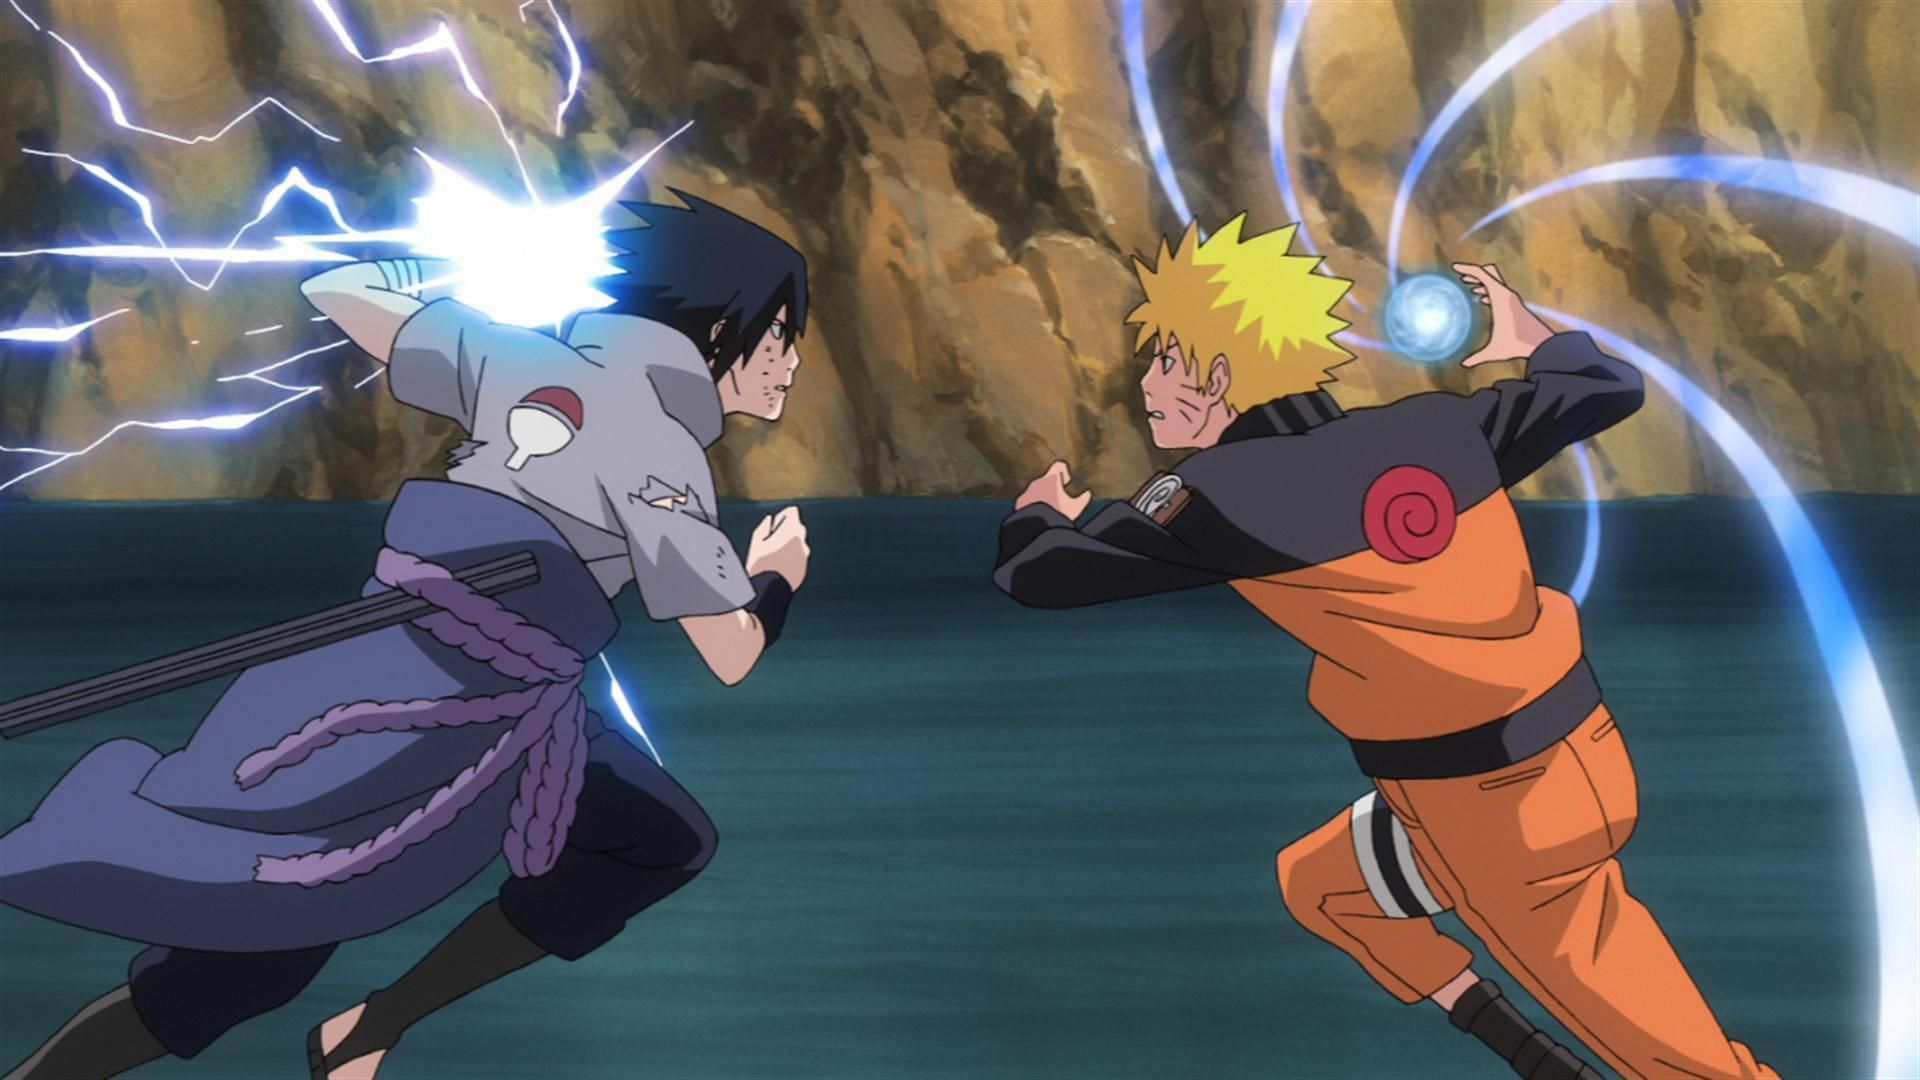 Naruto vs Sasuke at the Final Valley (Image via Studio Pierrot)